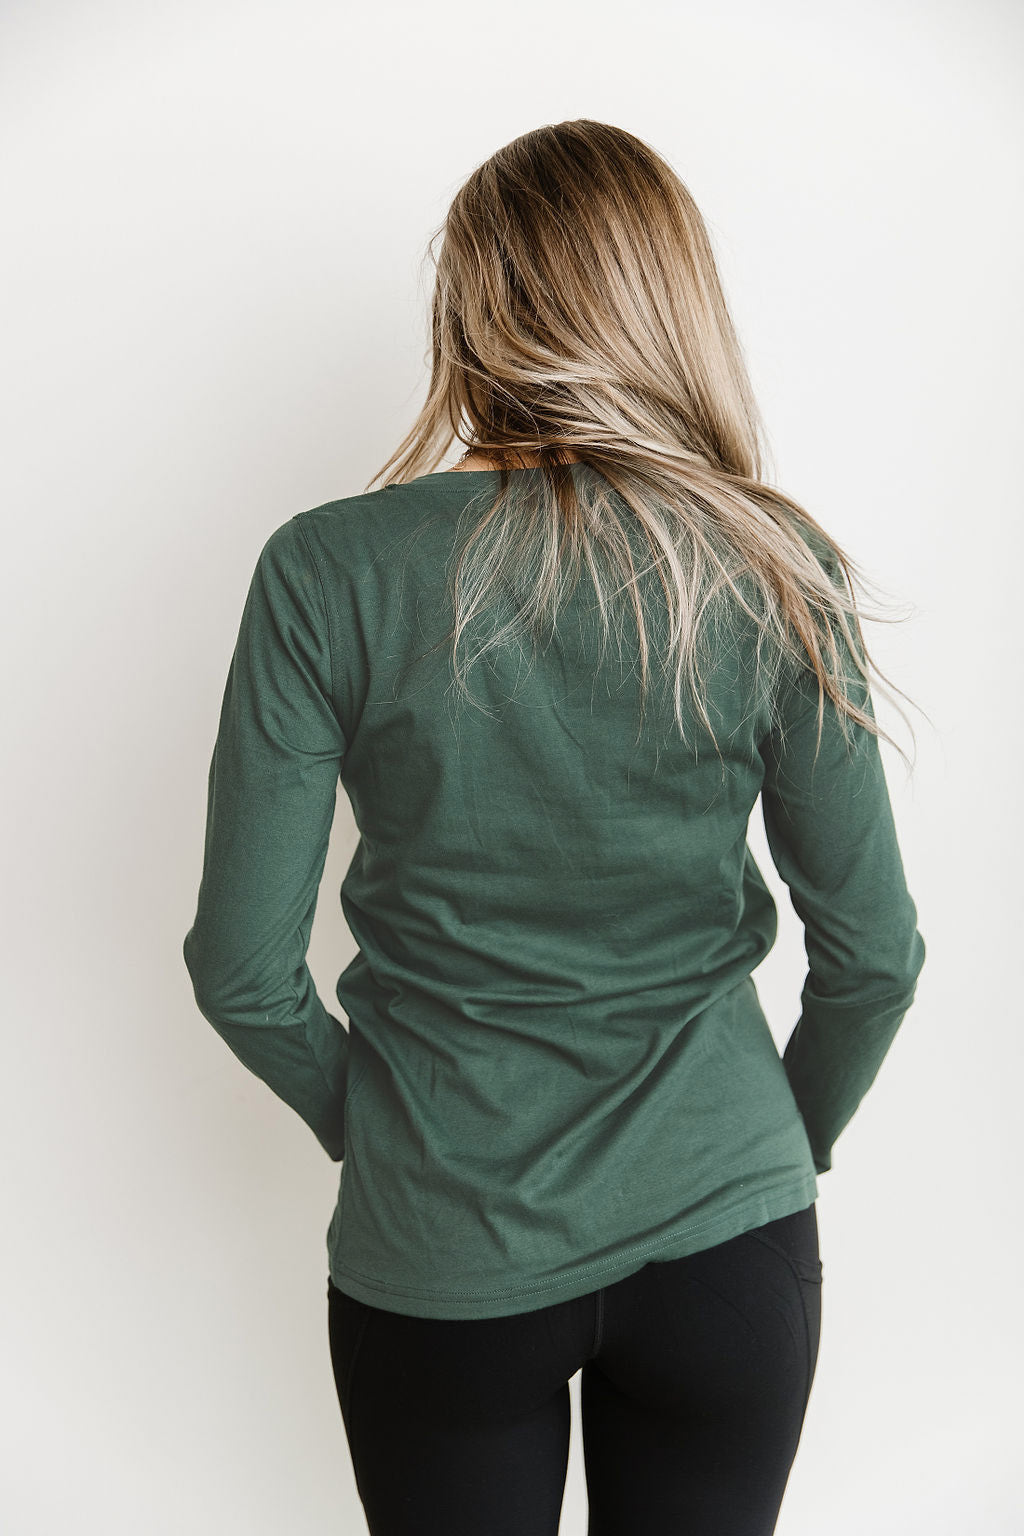 Long Sleeve VNeck Lulu Tee - Green - Mindy Mae's Marketcomfy cute hoodies